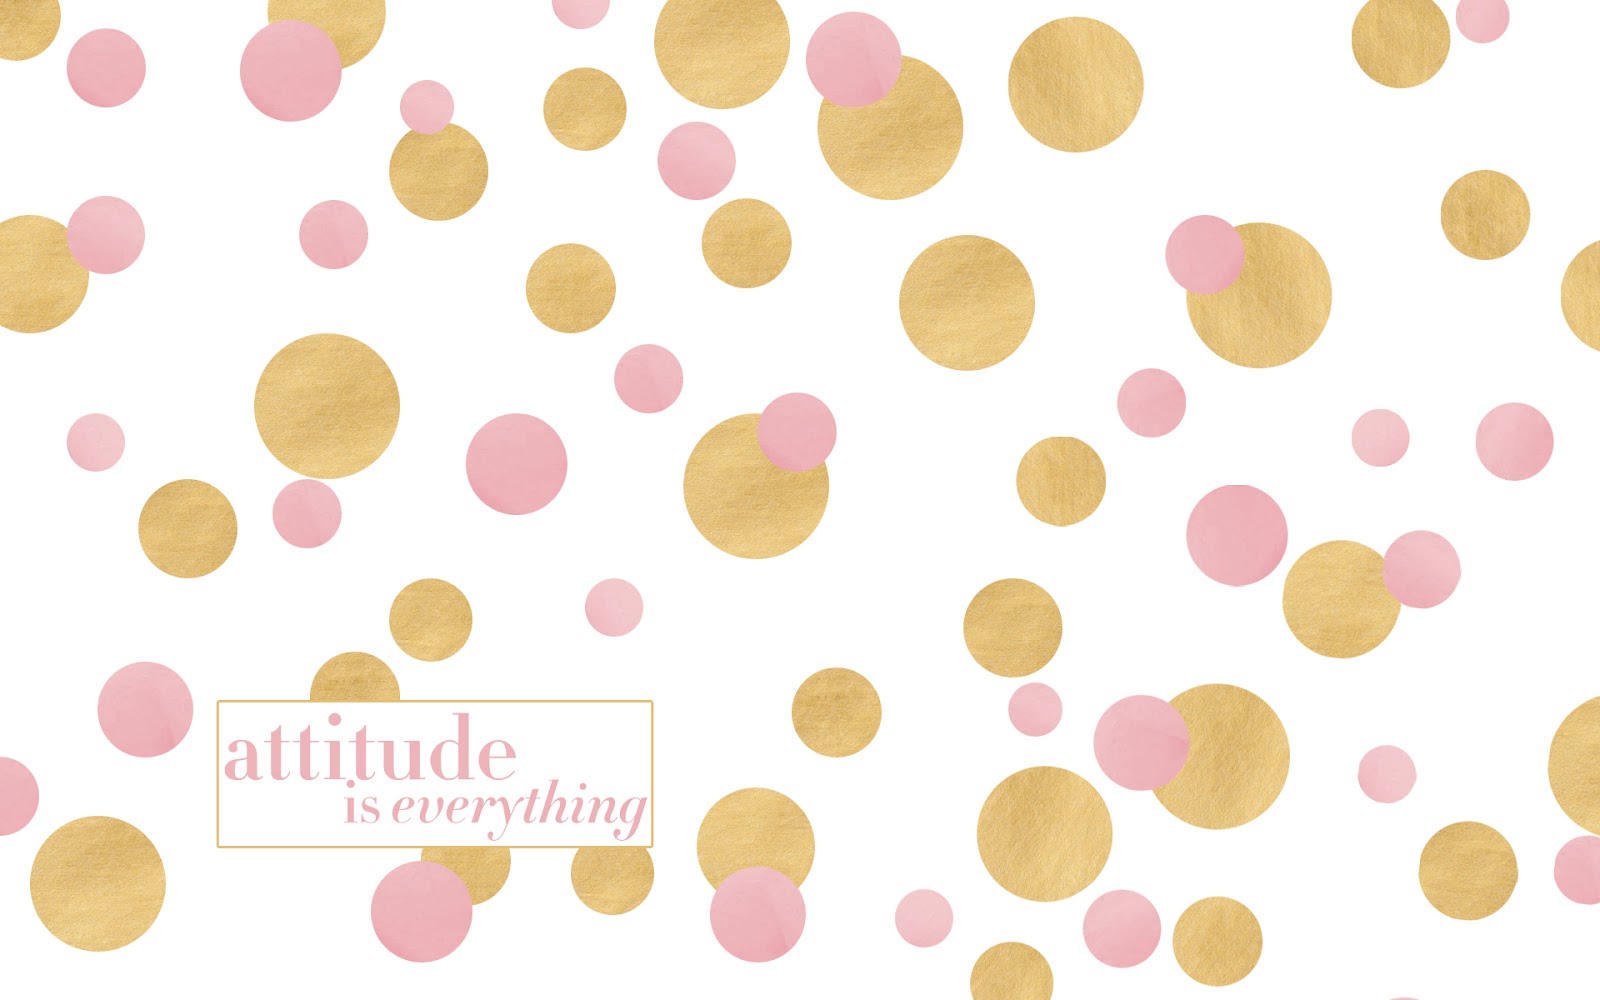 8. Rose Gold and White Polka Dot Nail Design - wide 2